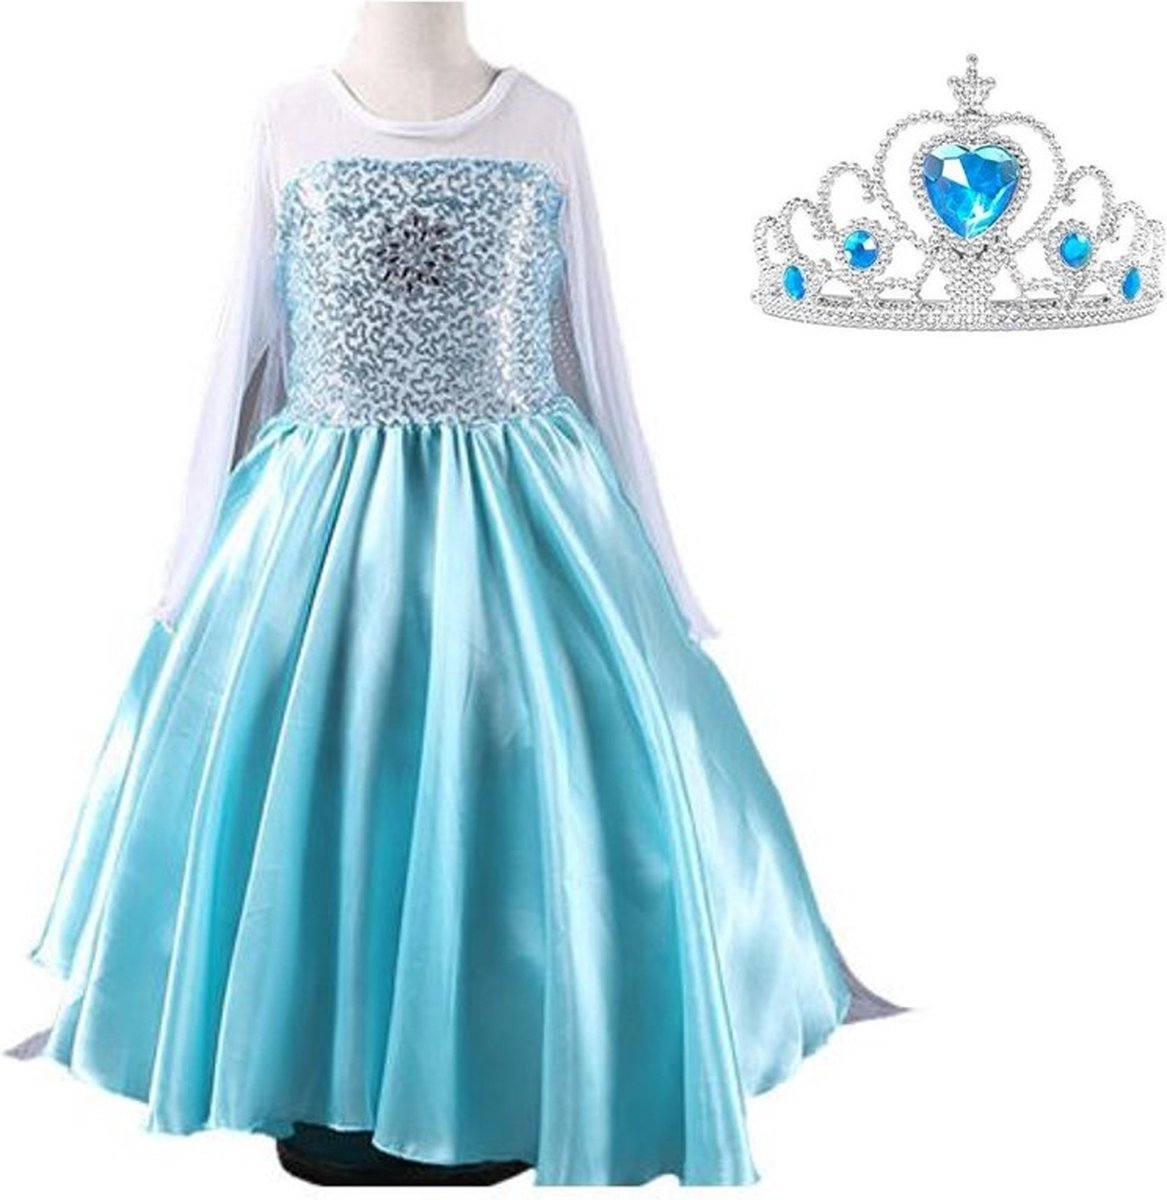 Elsa jurk Ster 130 met sleep + blauwe kroon maat 122-128 Prinsessenjurk meisje blauw Verkleedkleren meisje - La Señorita